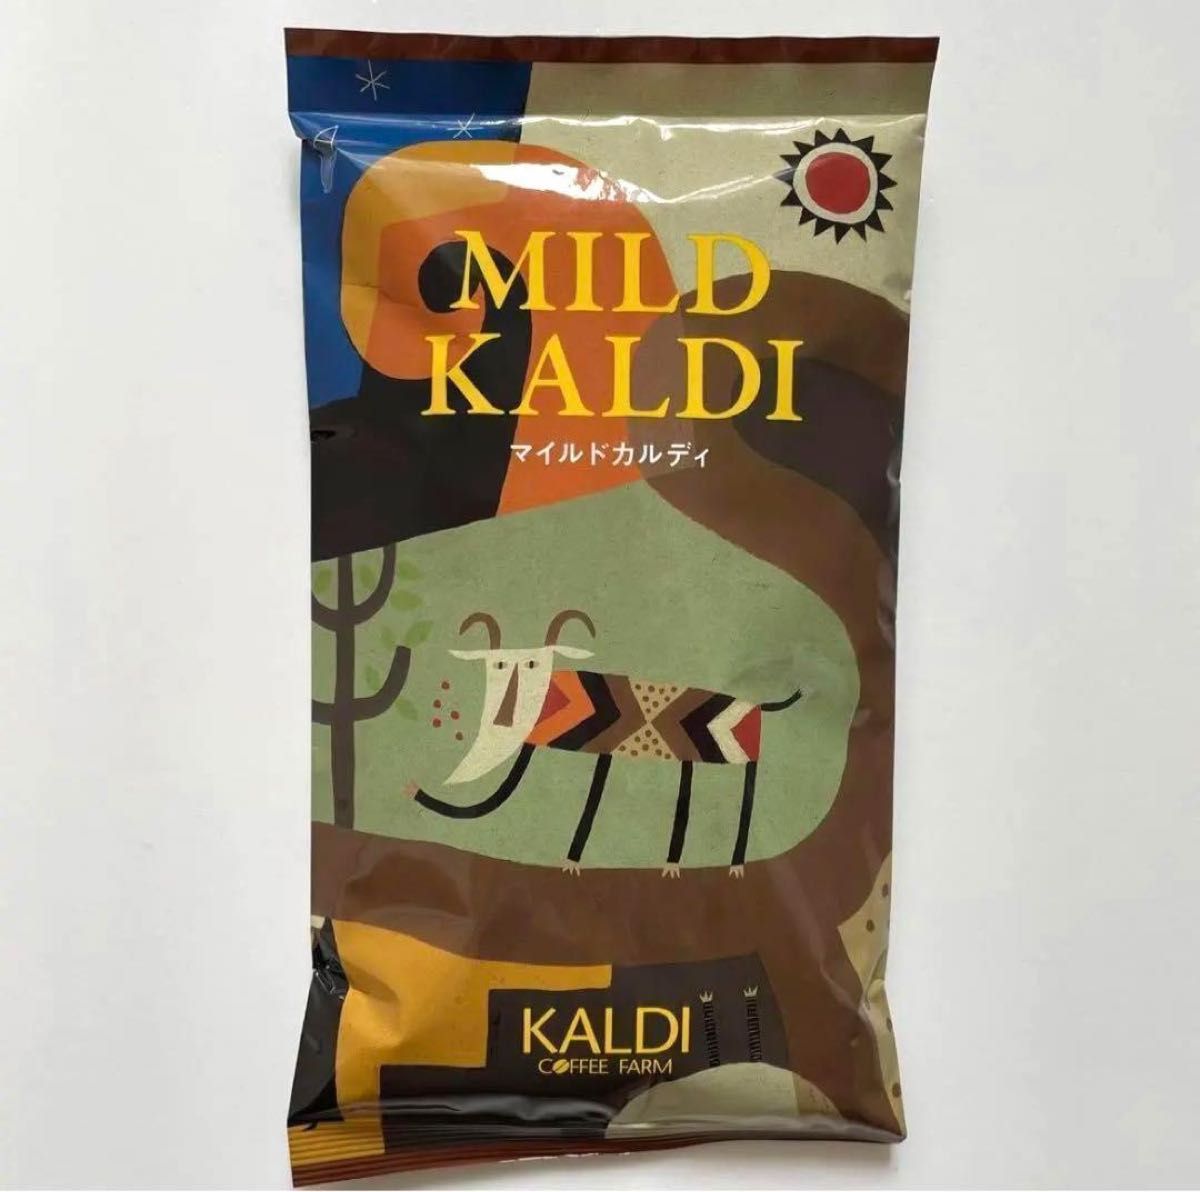 KALDI マイルドカルディ 中挽き コーヒー粉 200g × 3 袋